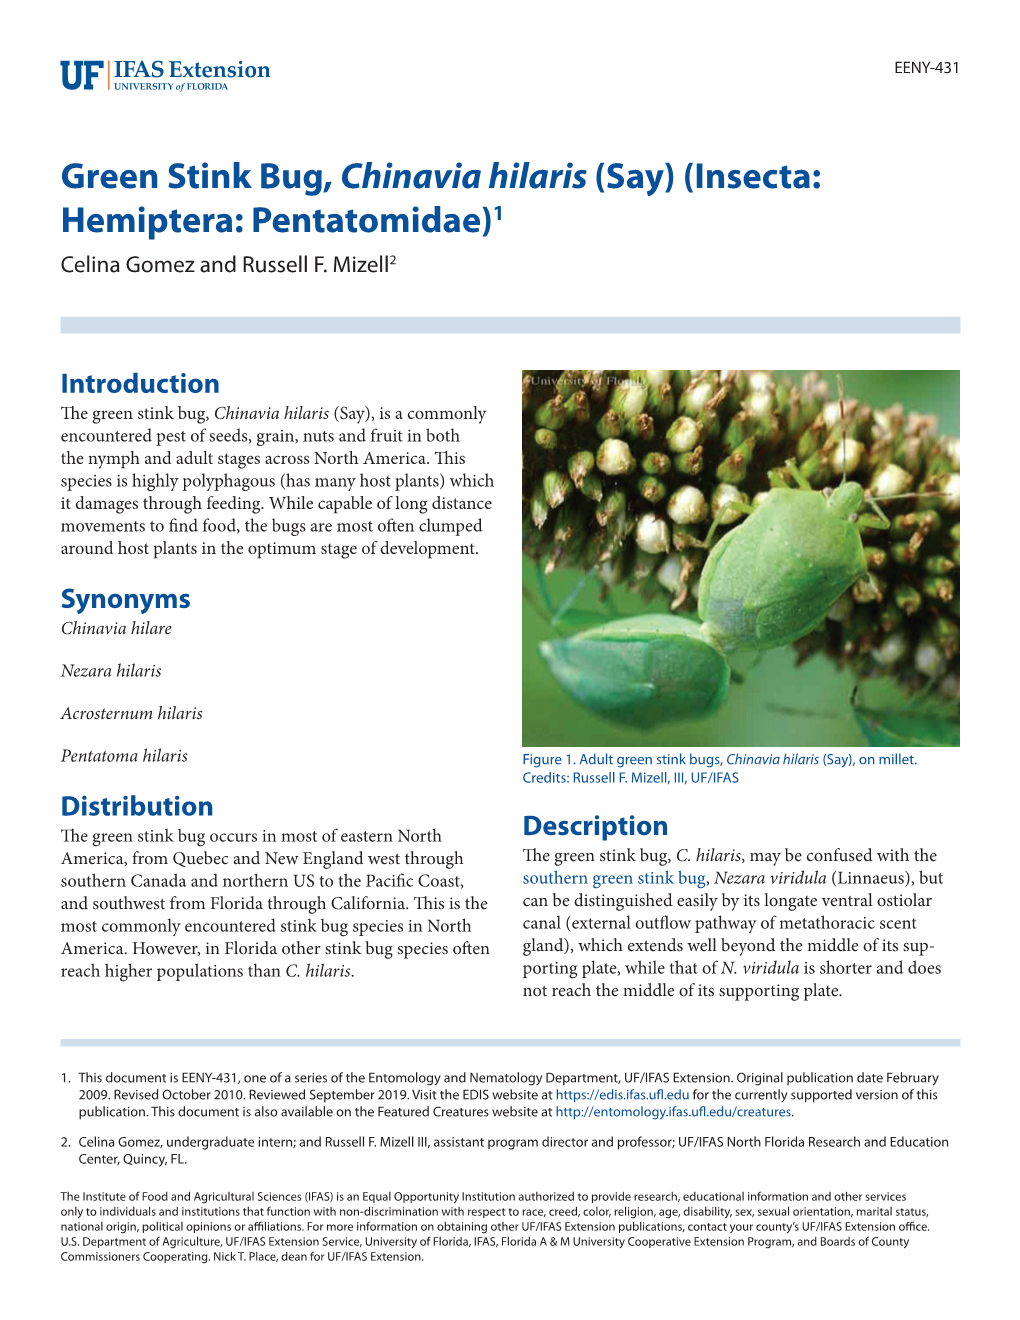 Green Stink Bug, Chinavia Hilaris (Say) (Insecta: Hemiptera: Pentatomidae)1 Celina Gomez and Russell F